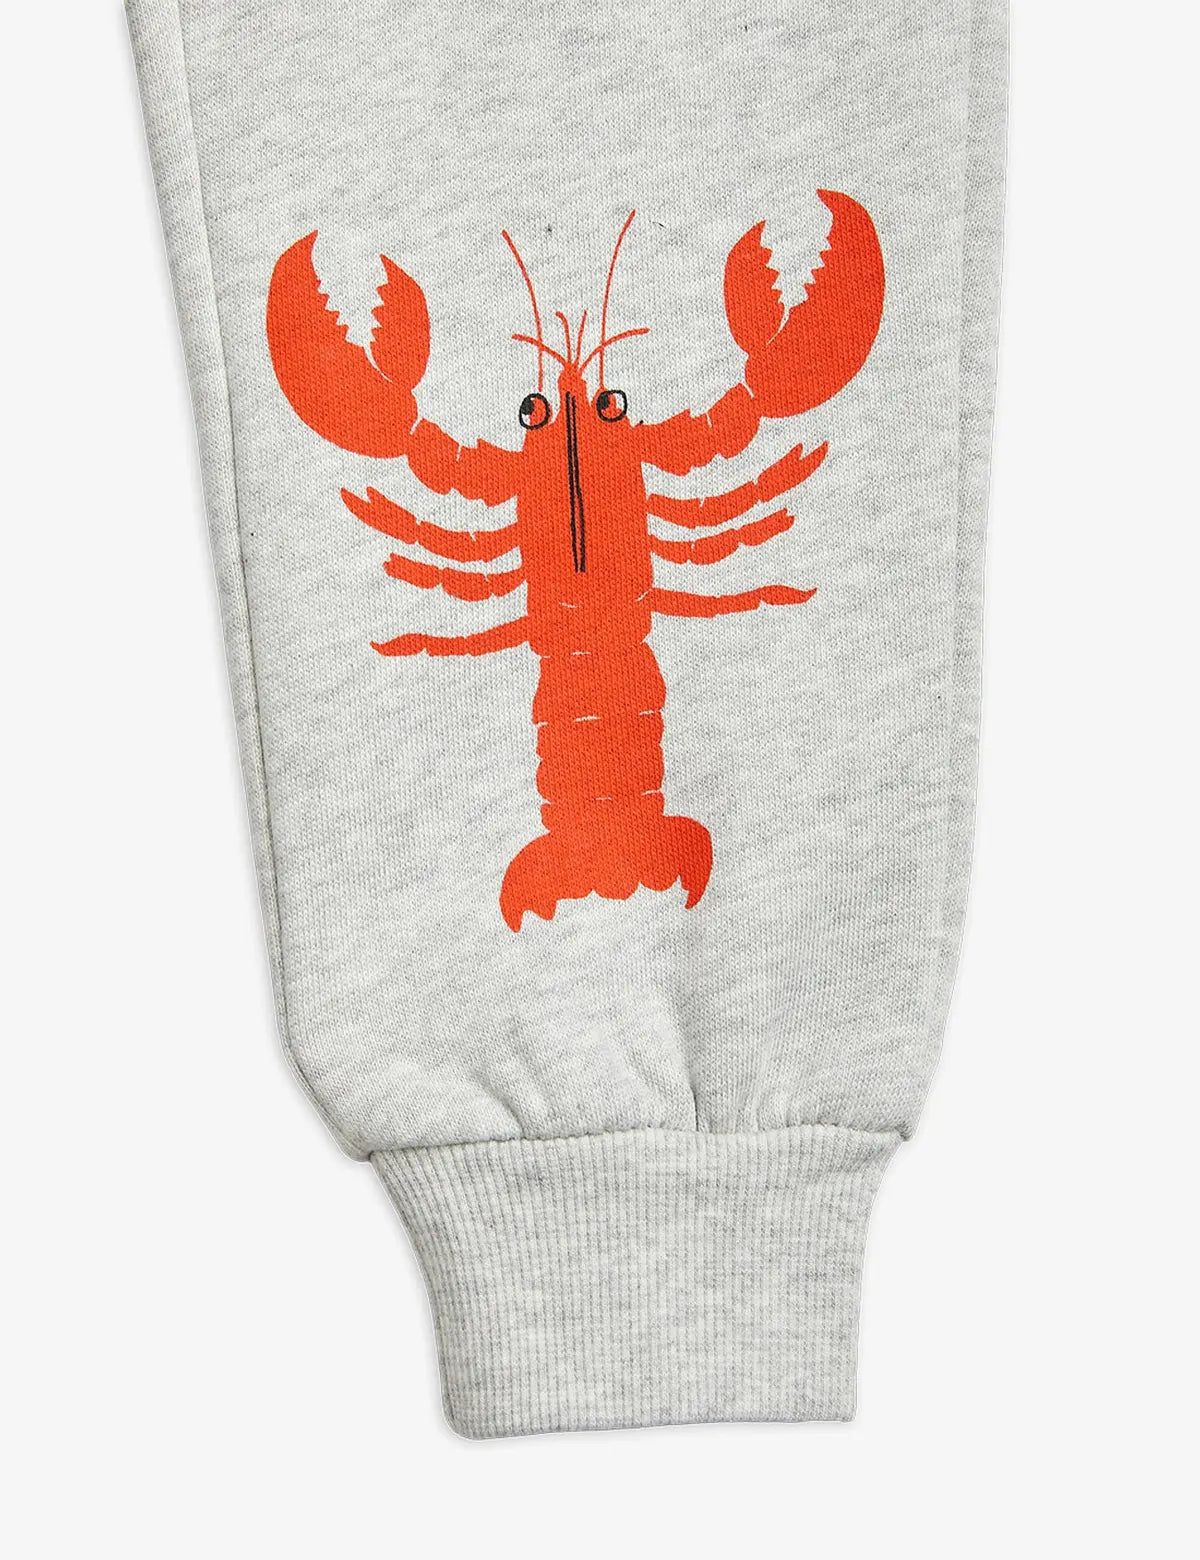 Grey Lobster Sweatpants